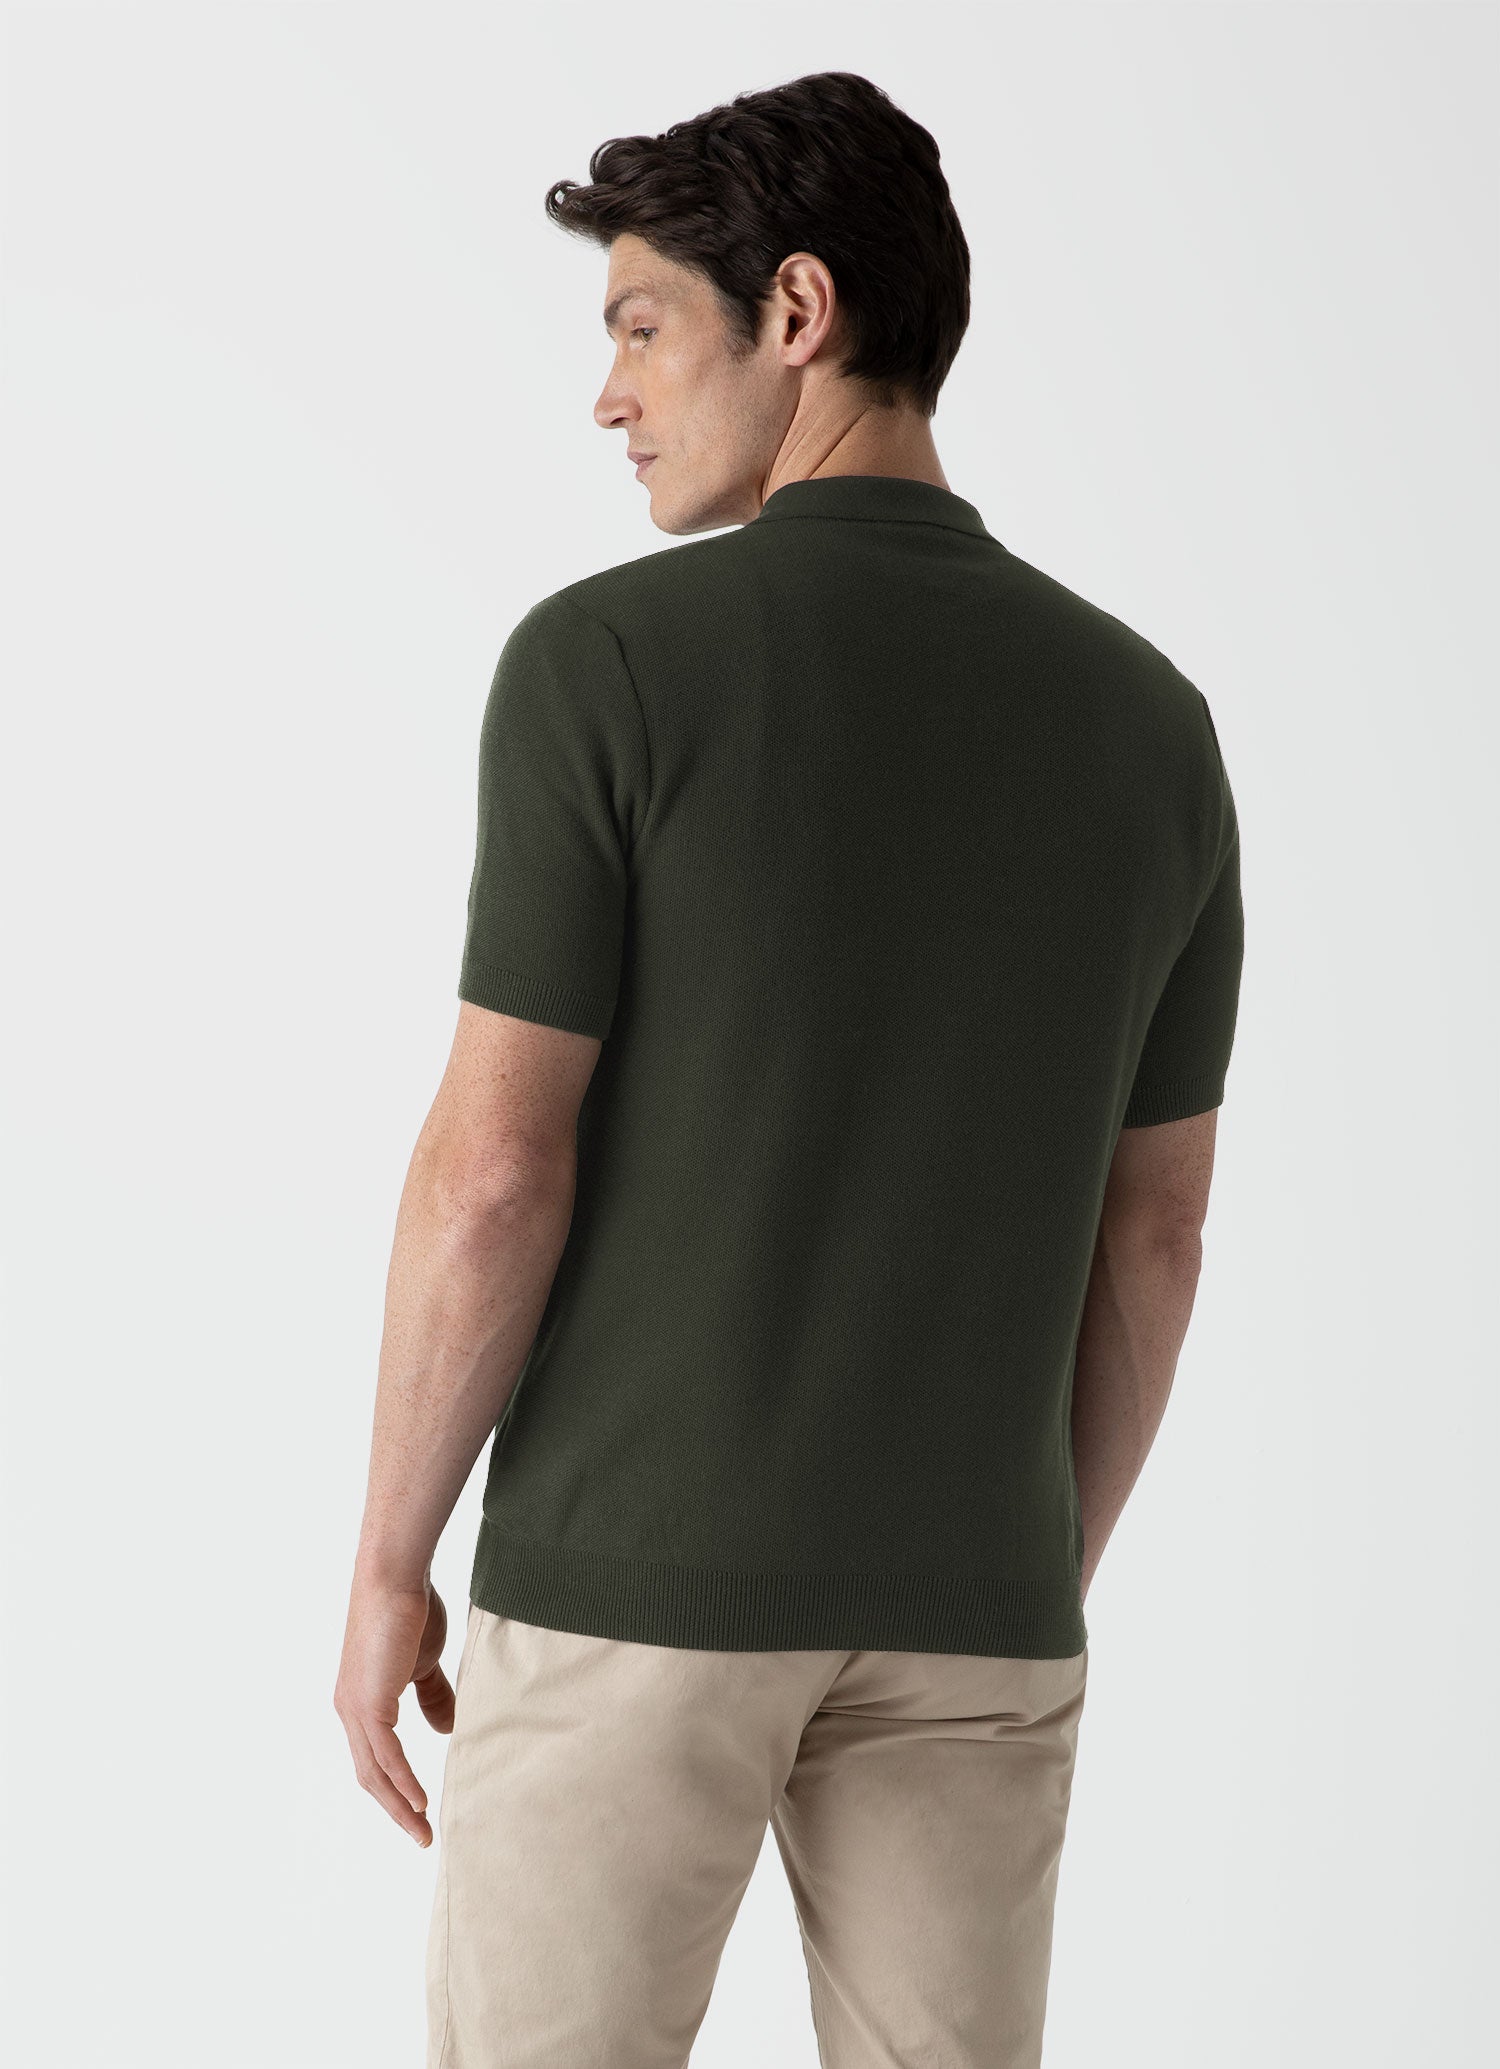 Men's Knit Polo Shirt in Hunter Green